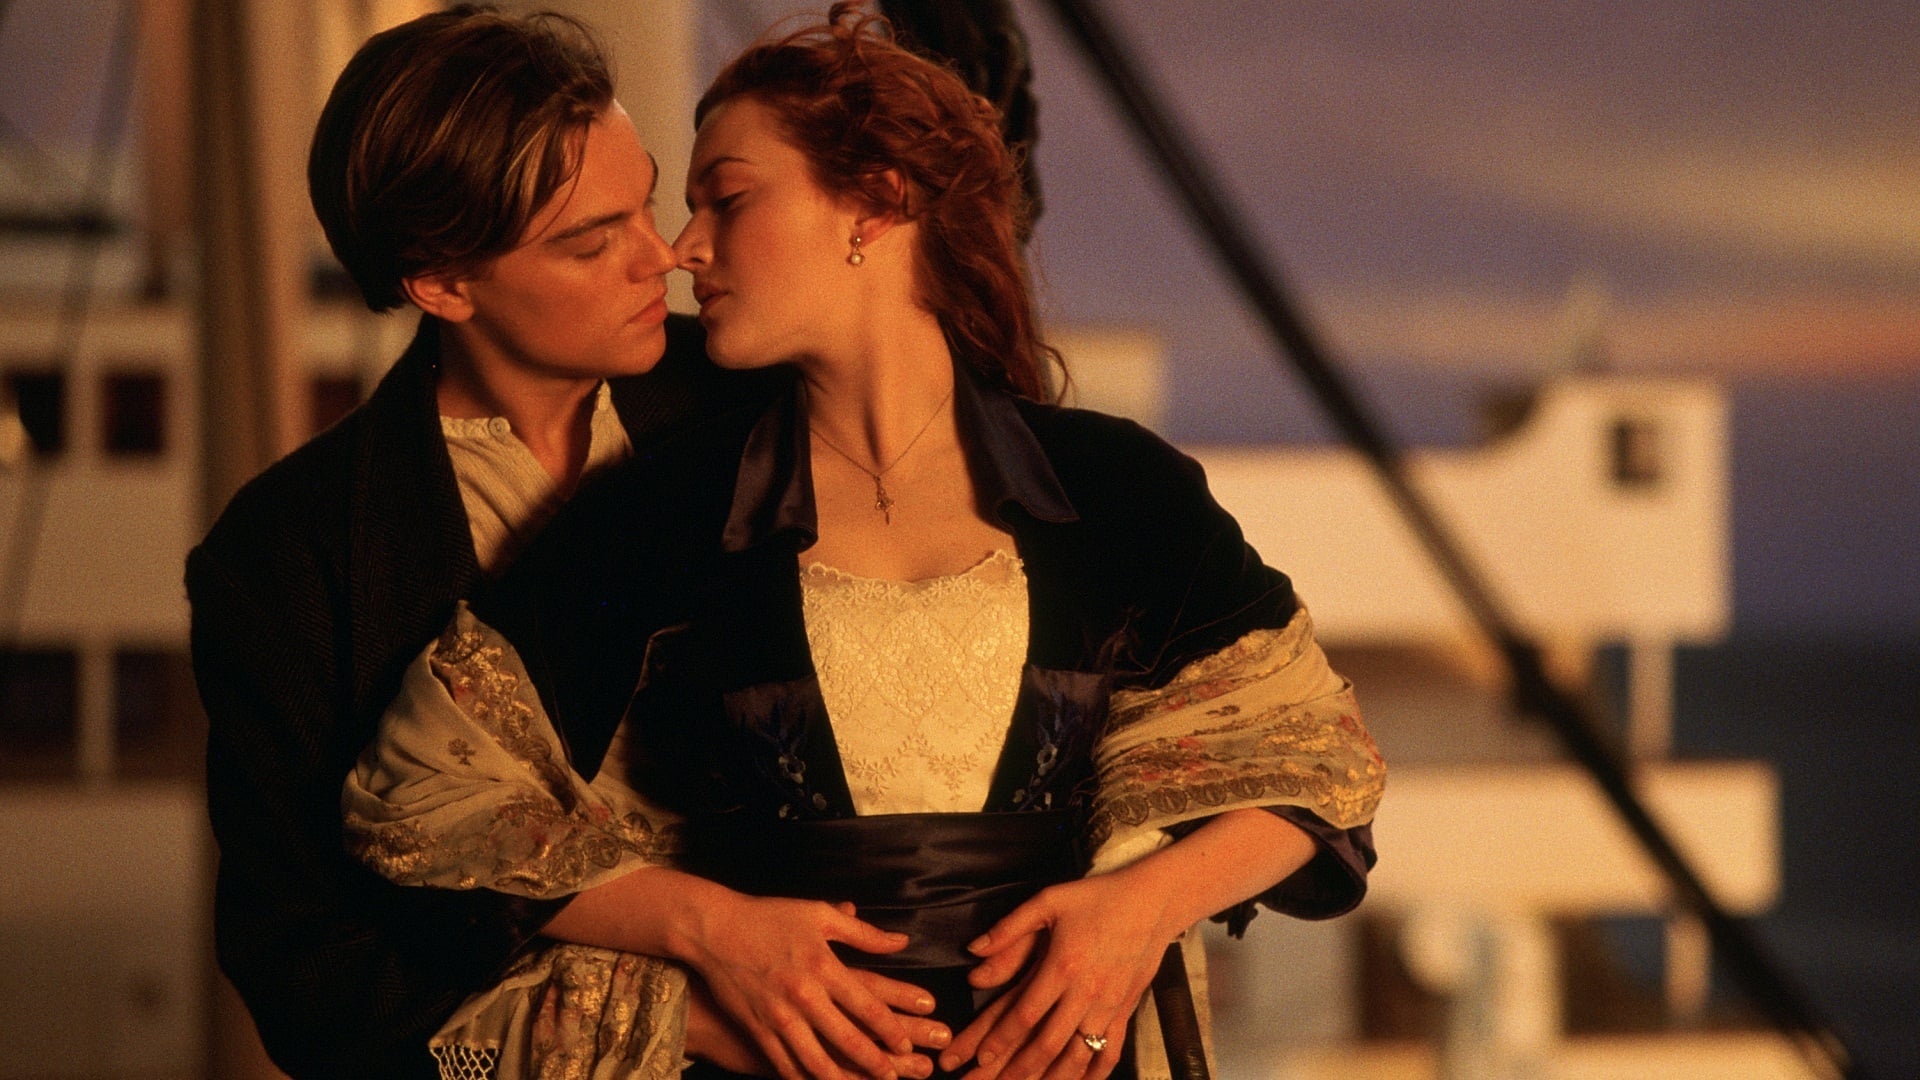 Titanic ไททานิค (1997)